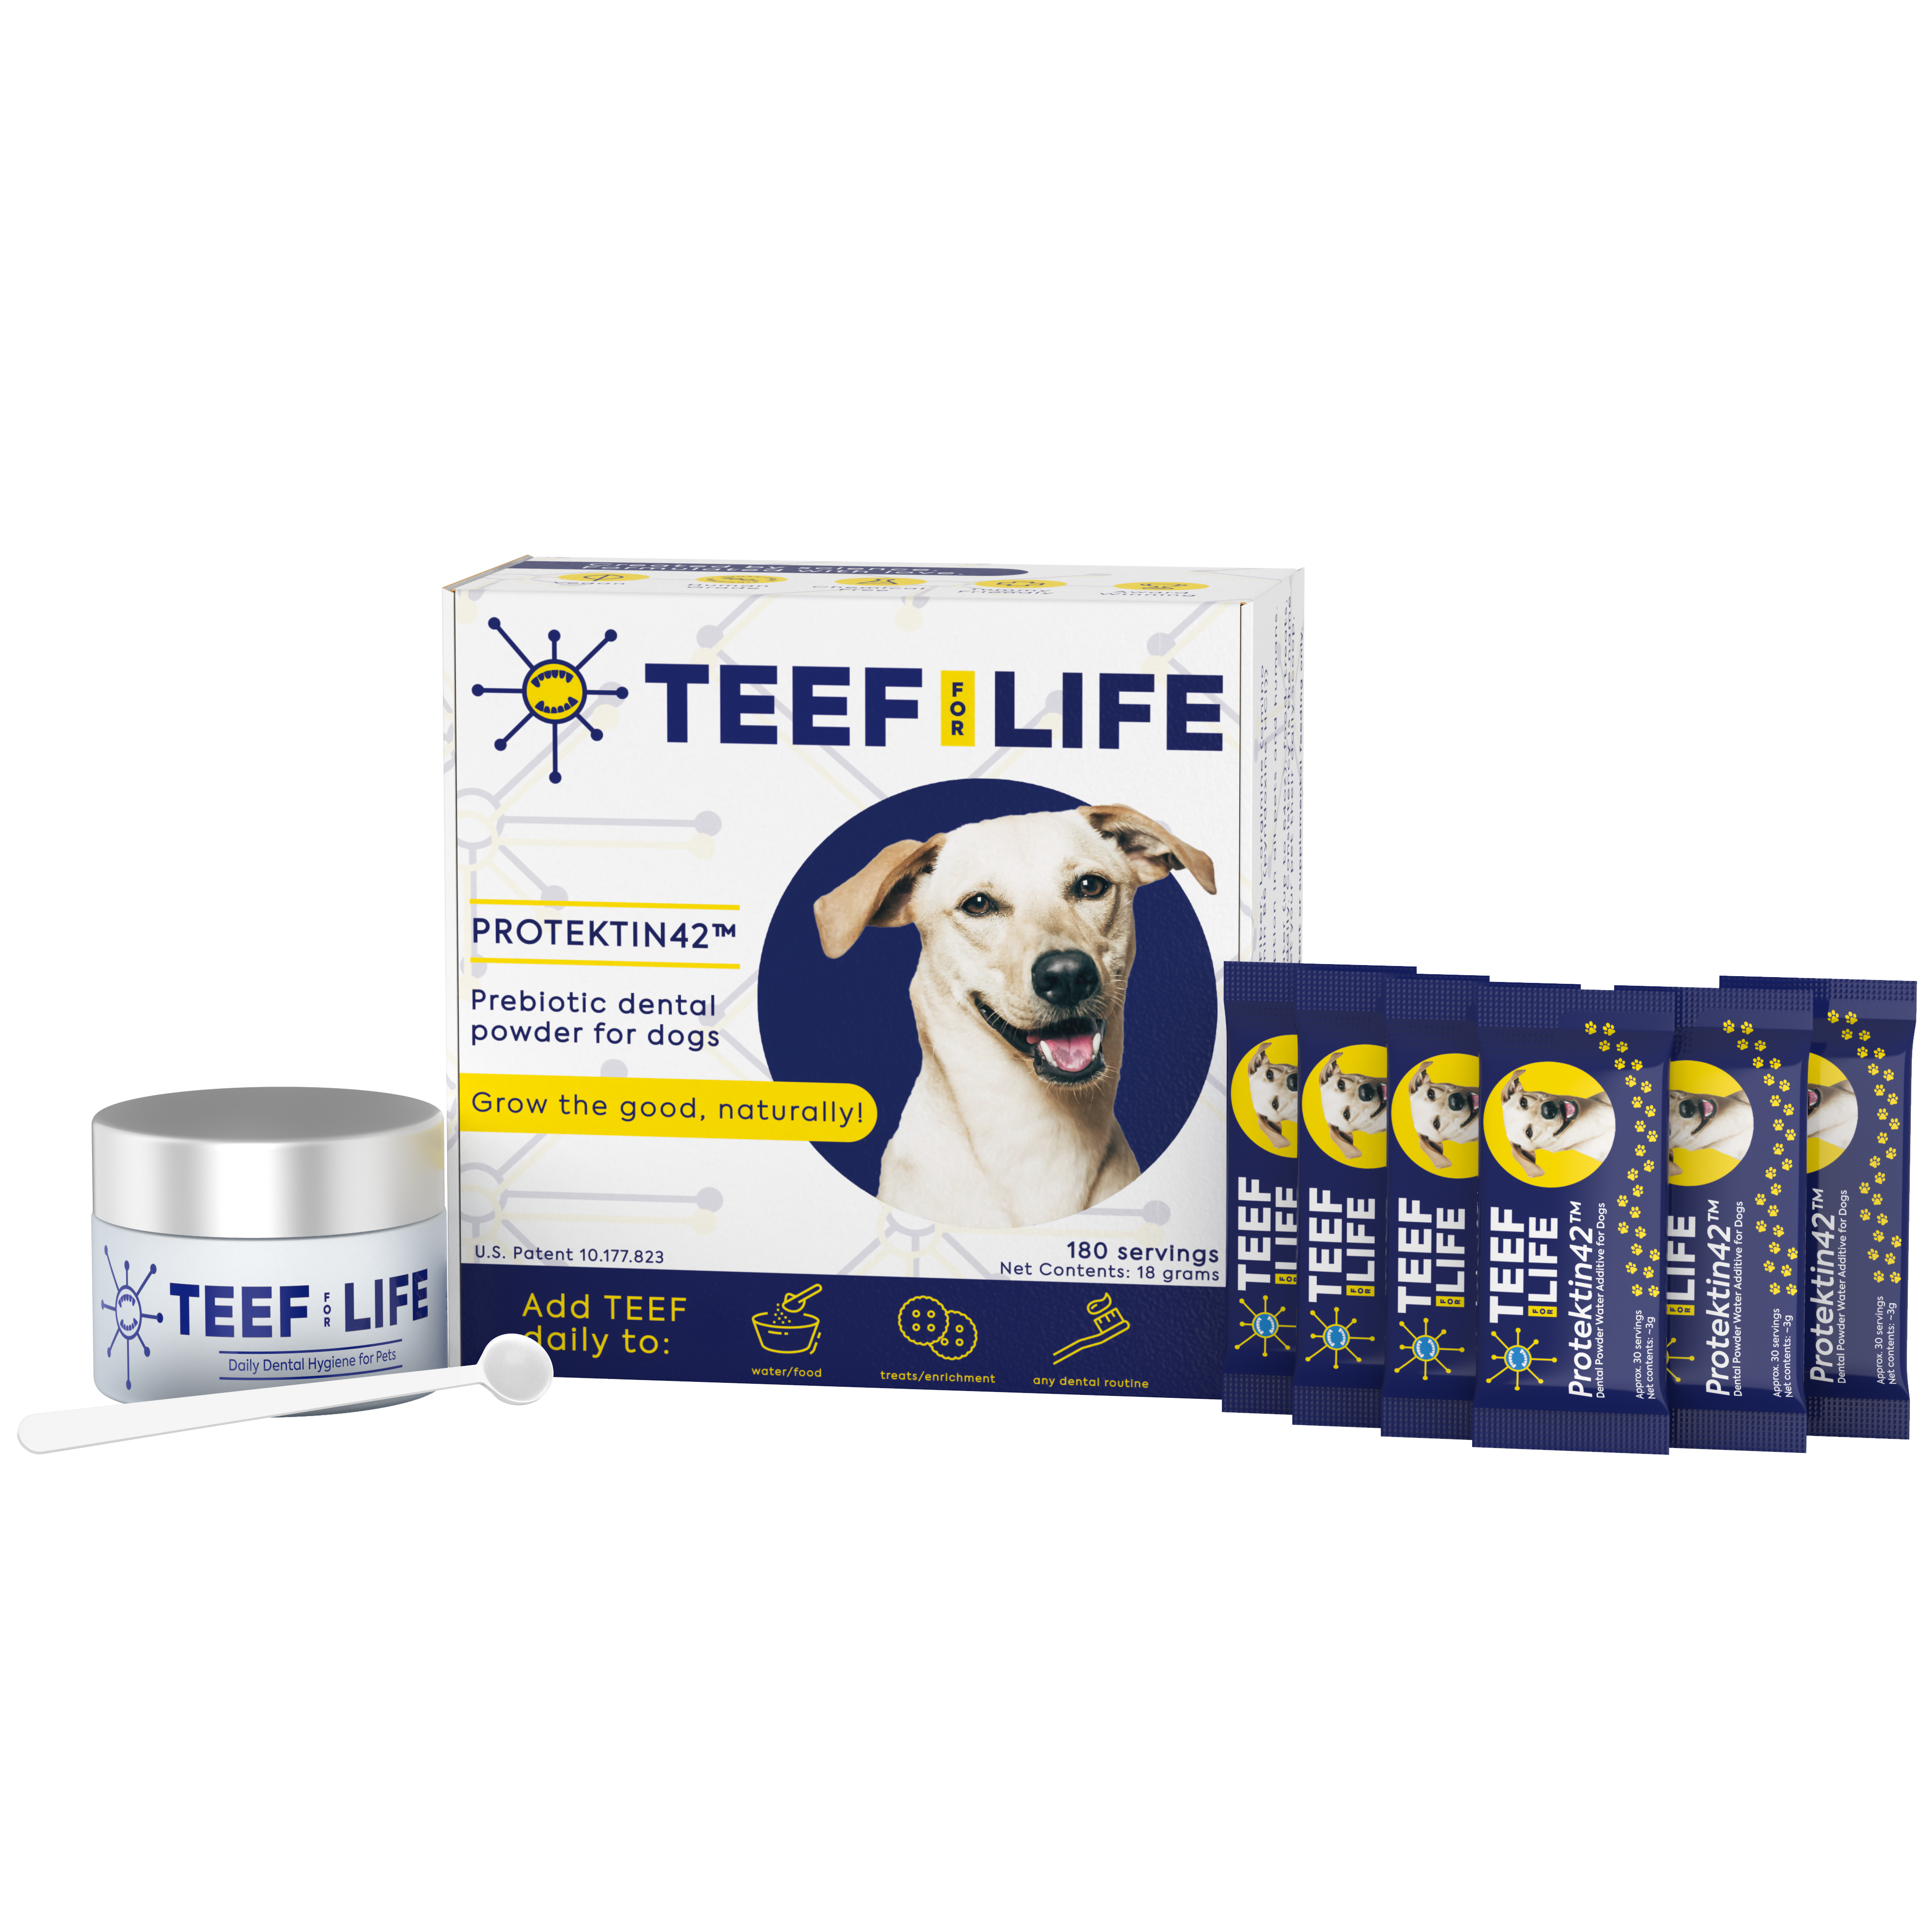 TEEF for Life - Protektin42™ - Kit: Prebiotic Dental Powder for Dogs